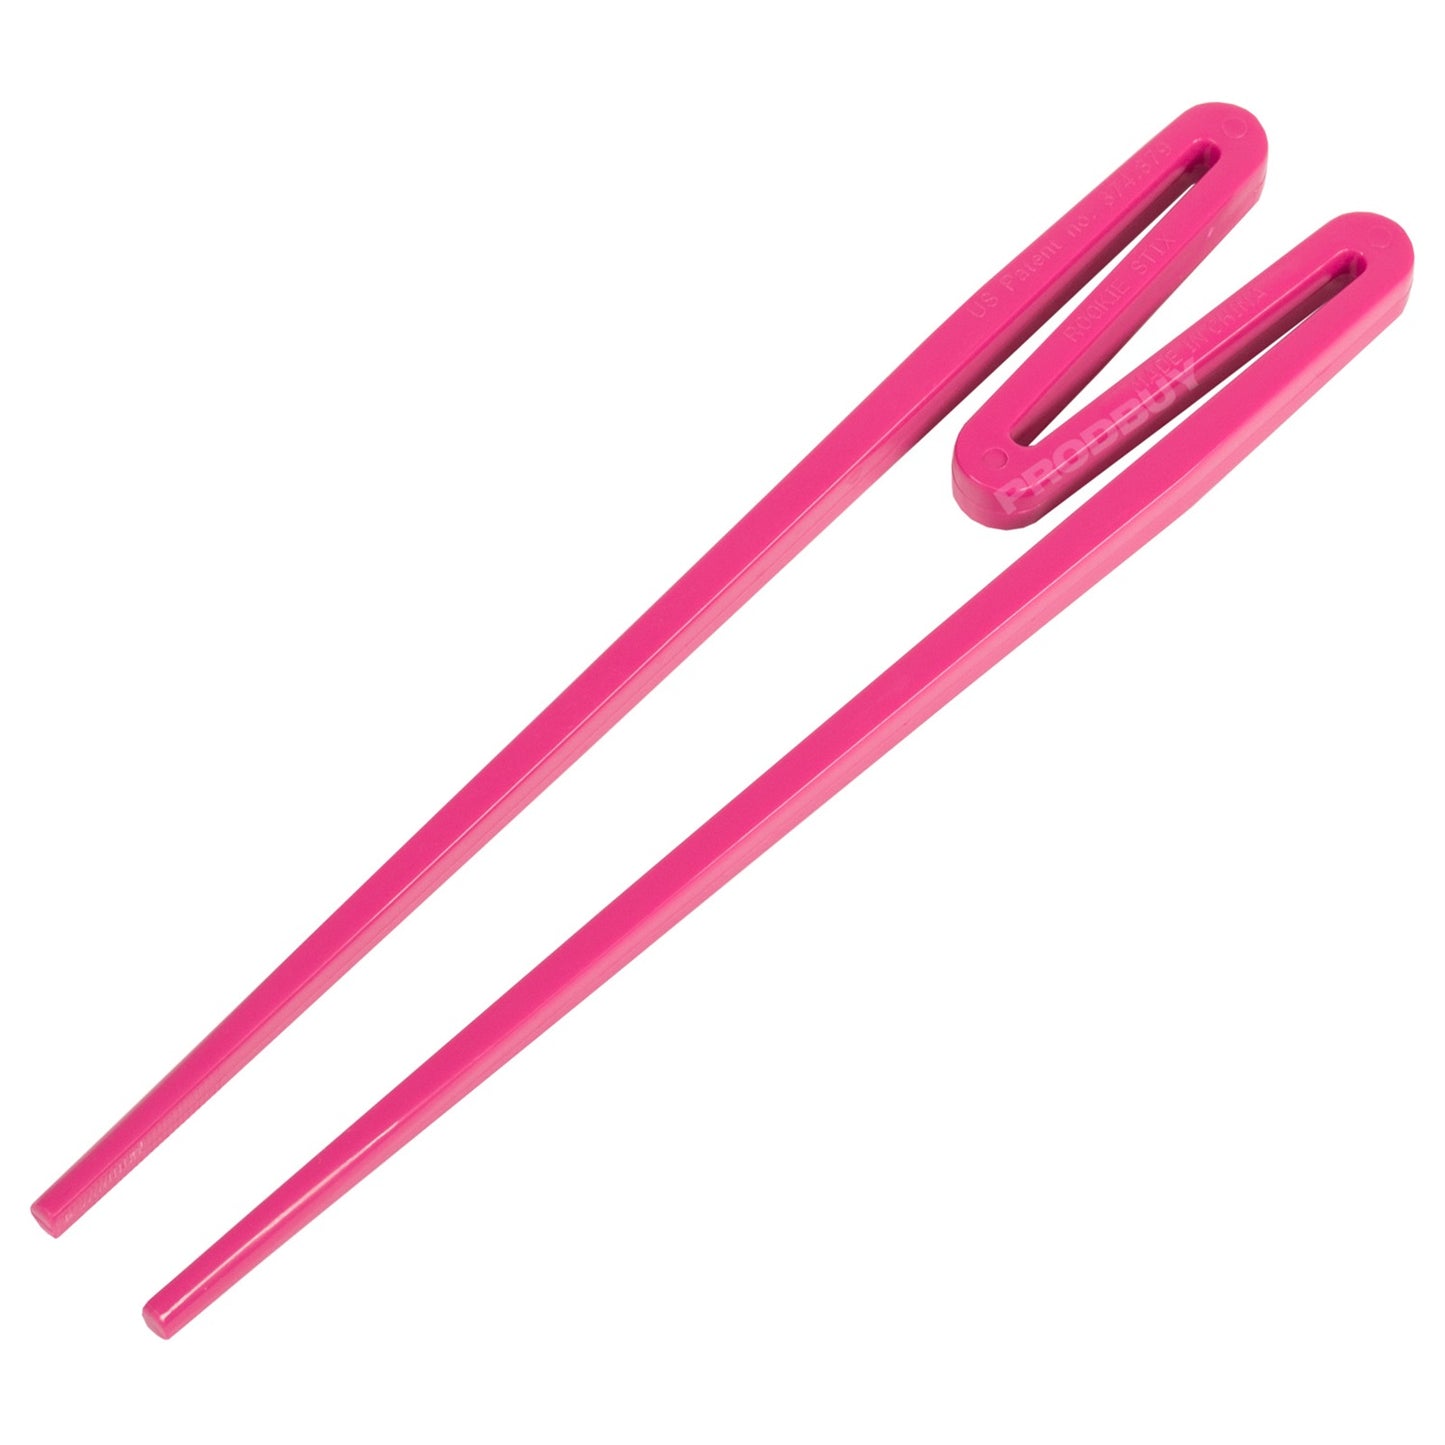 Typhoon Single Pair of Rookie Stix Easy To Use Chopsticks